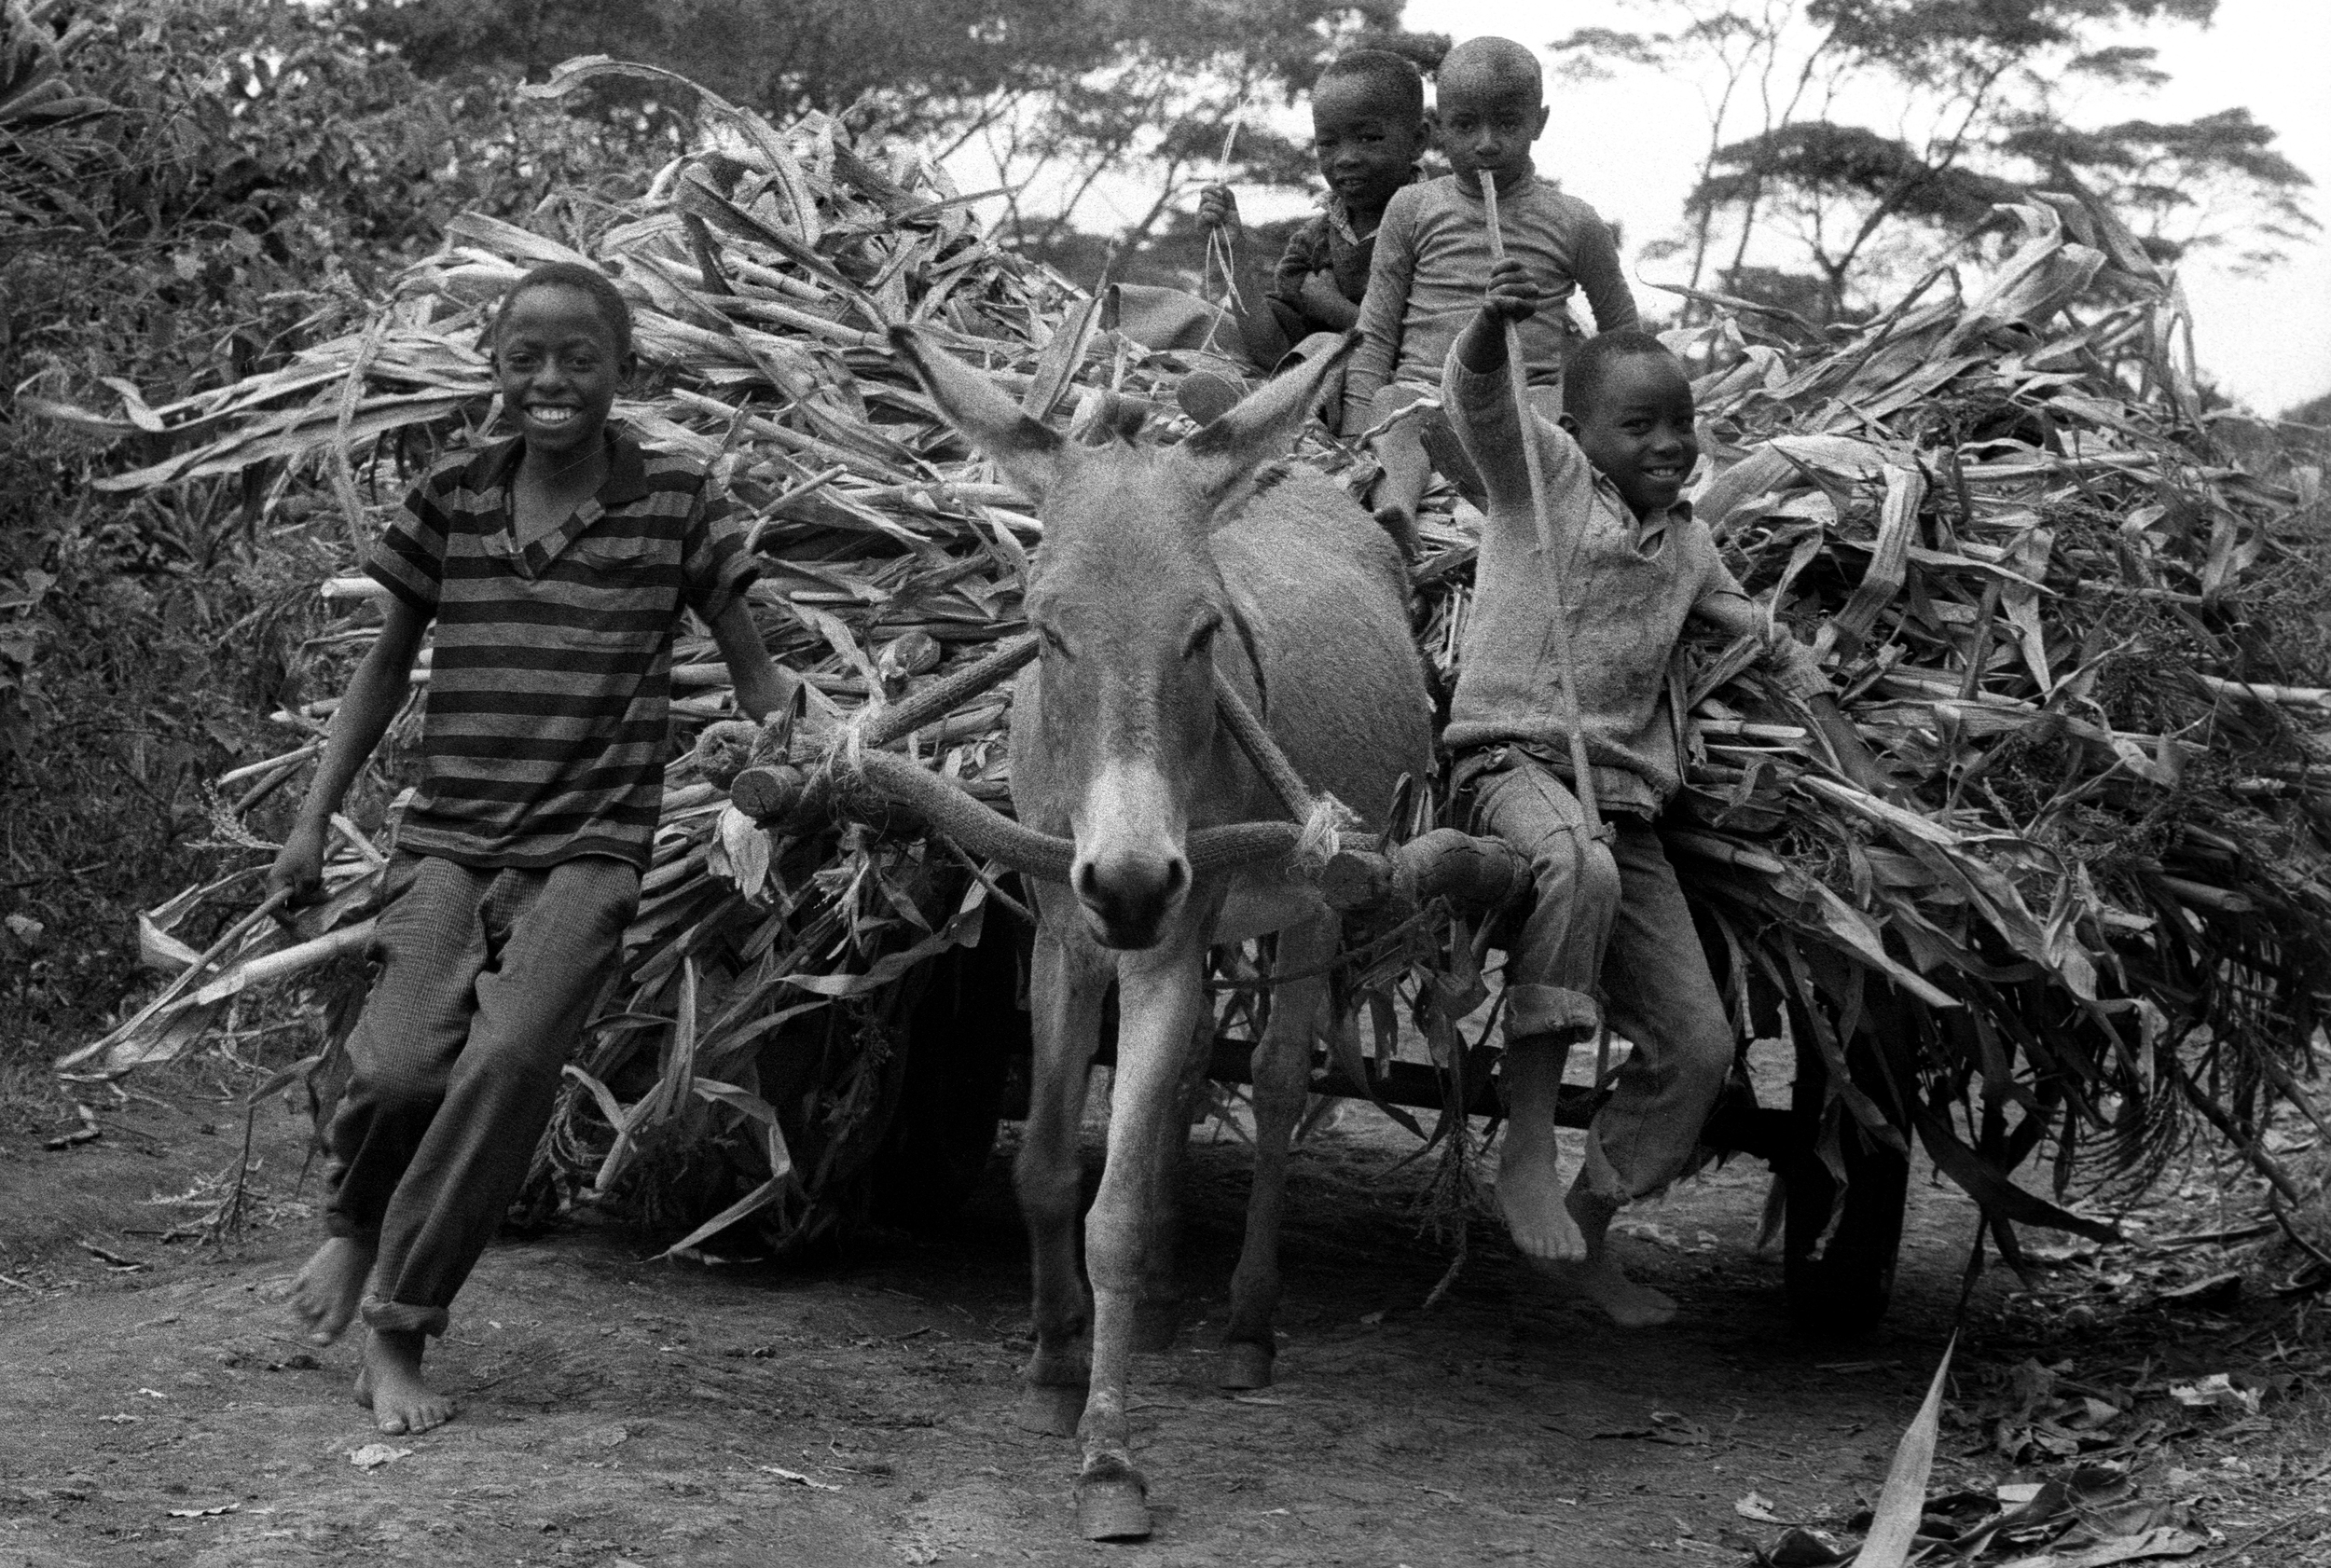 Kikuyu boys with donkey cart